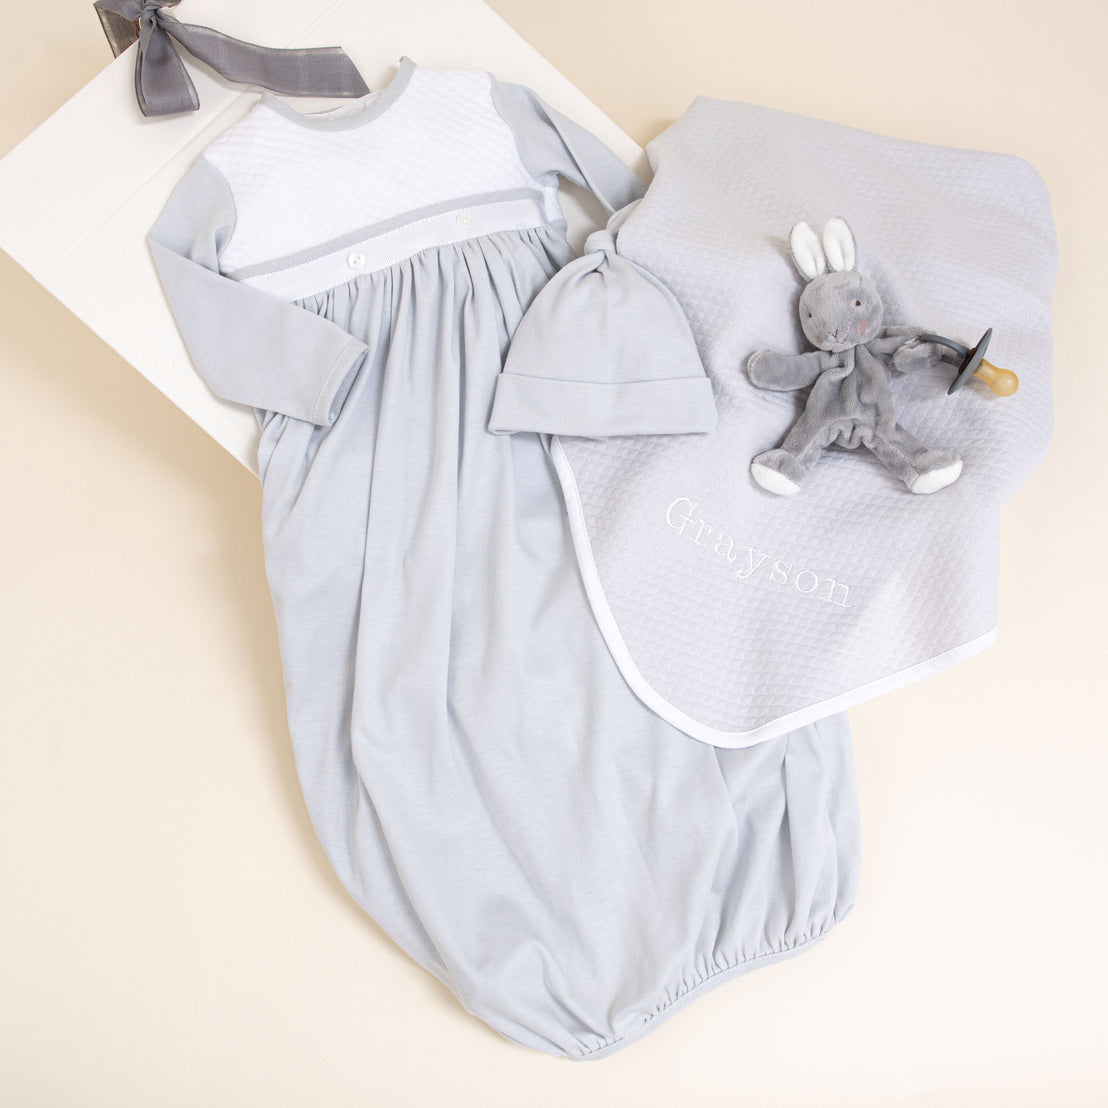 Grayson Newborn Gift Set - Save 10%